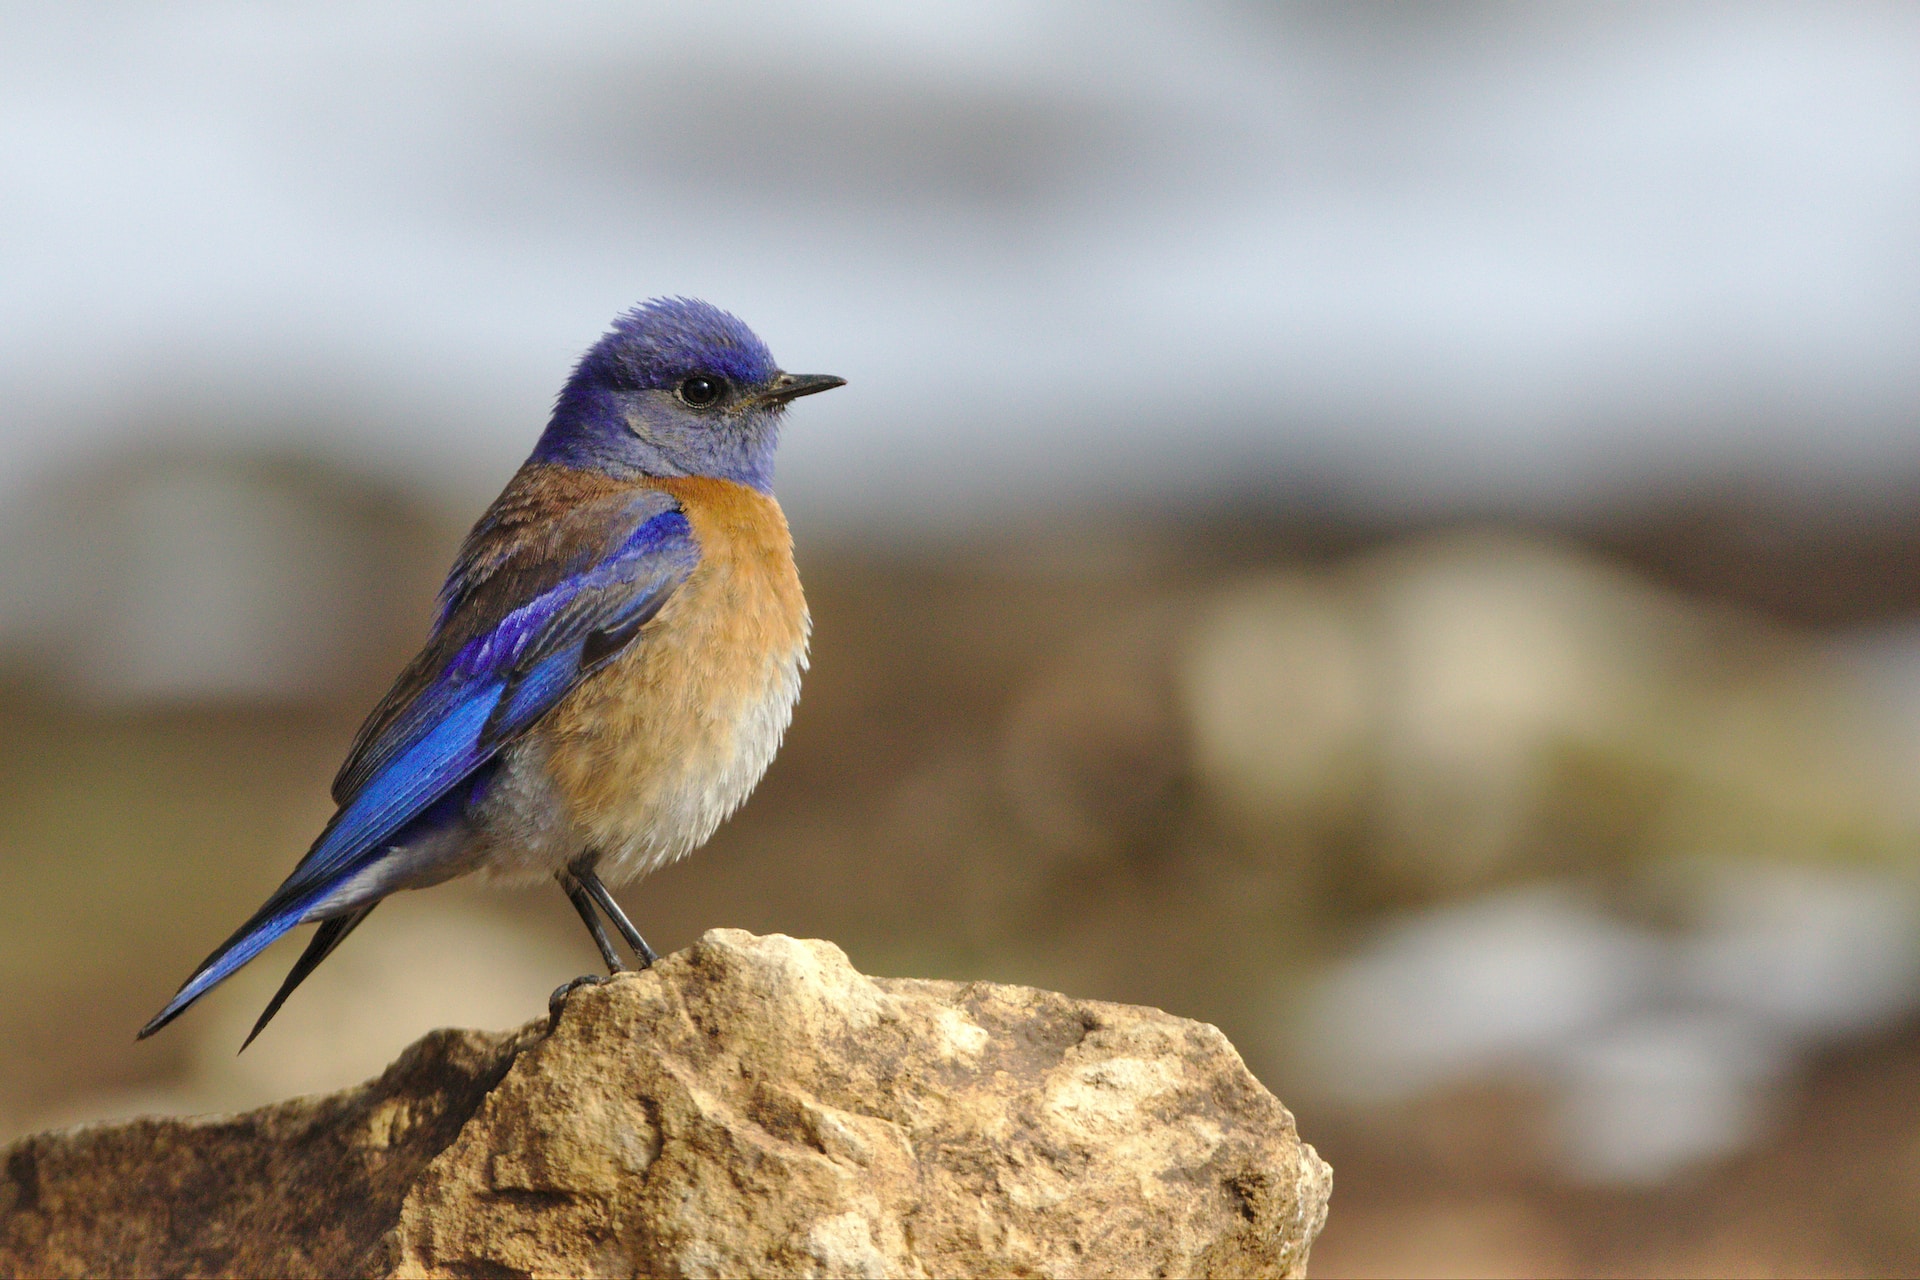 A bluebird sitting on a rock